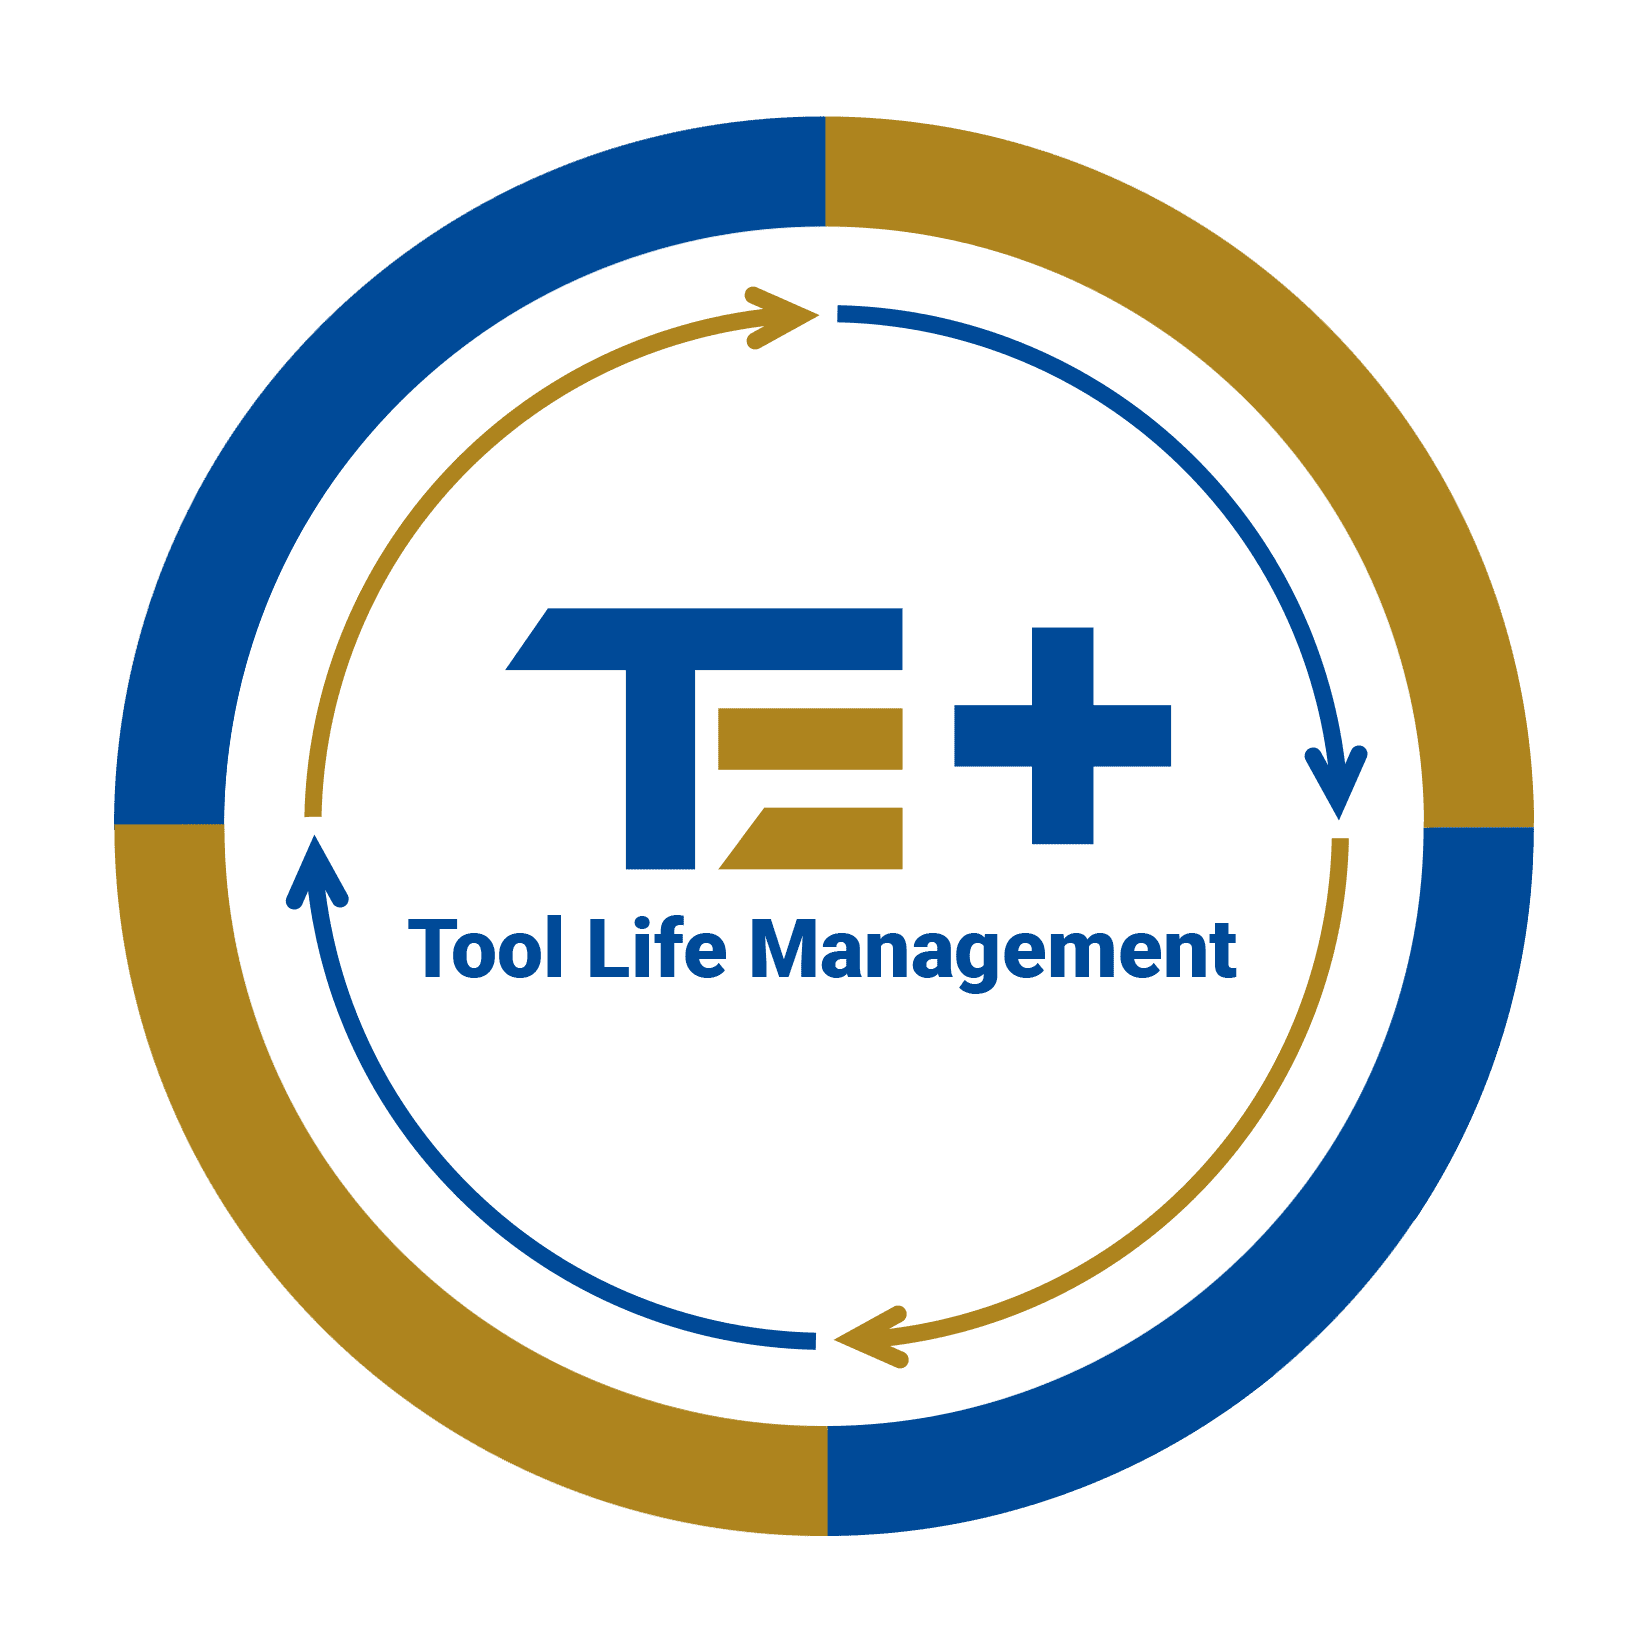 Tru-Edge Tool Life Management